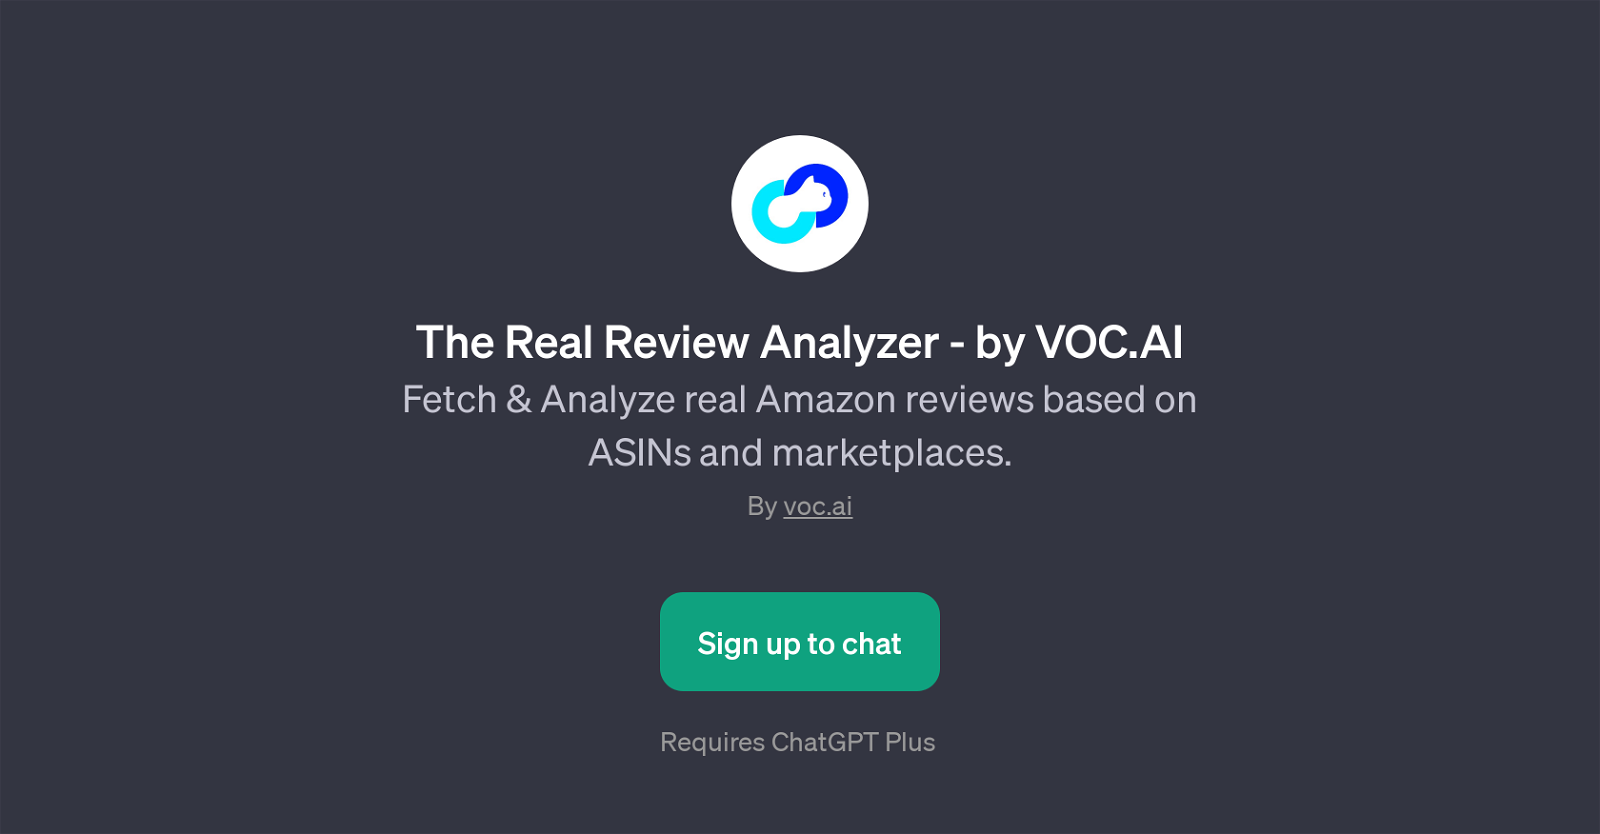 The Real Review Analyzer - by VOC.AI website